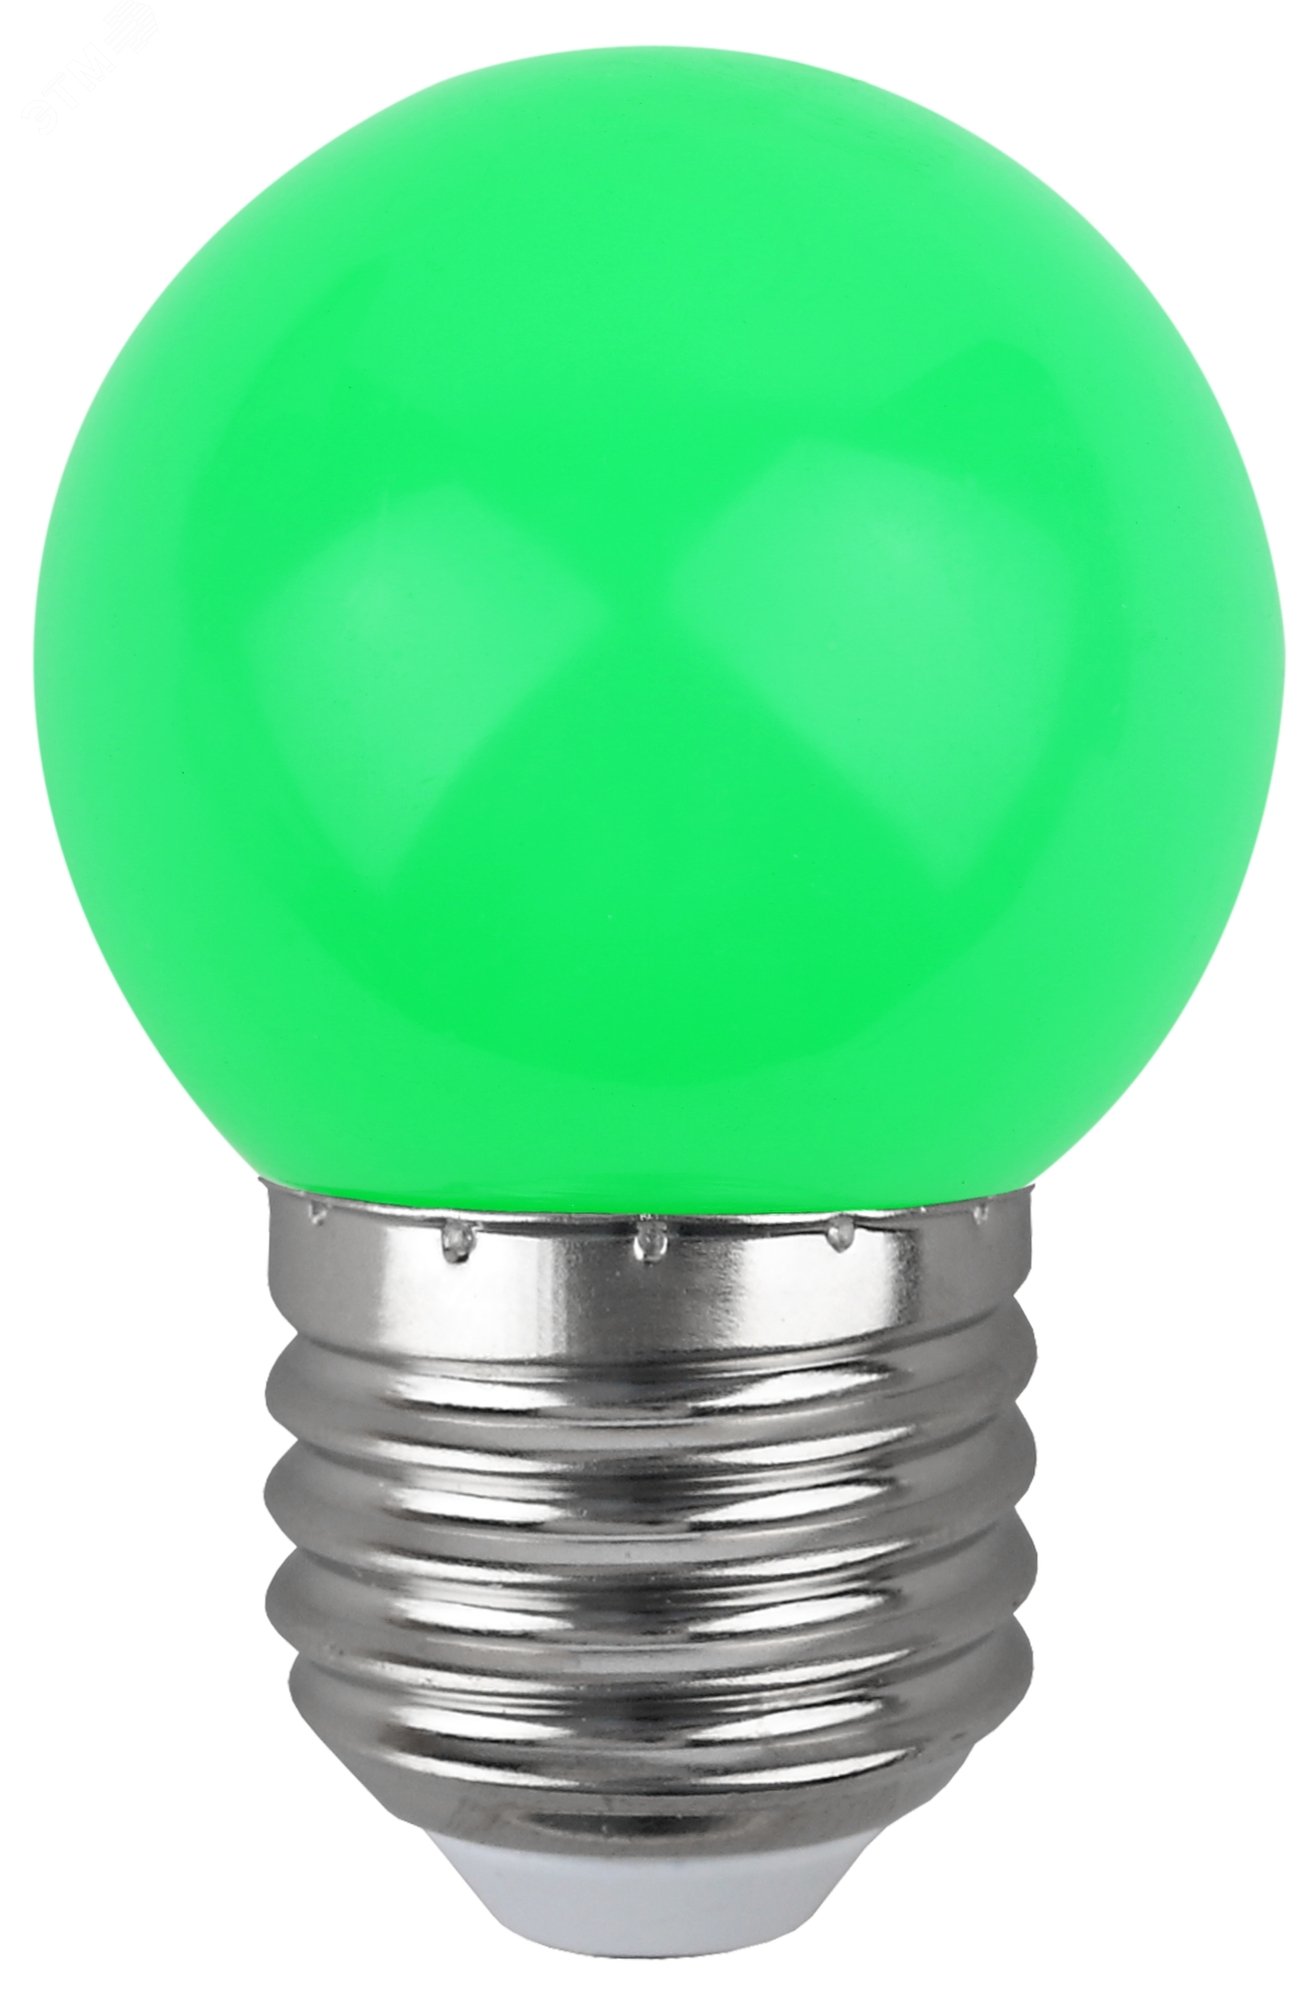 Лампа светодиодная для Белт-Лайт диод. шар, зел., 4SMD, 1W, E27 ERAGL45-E27 LED Р45-1W-E27 Б0049574 ЭРА - превью 2